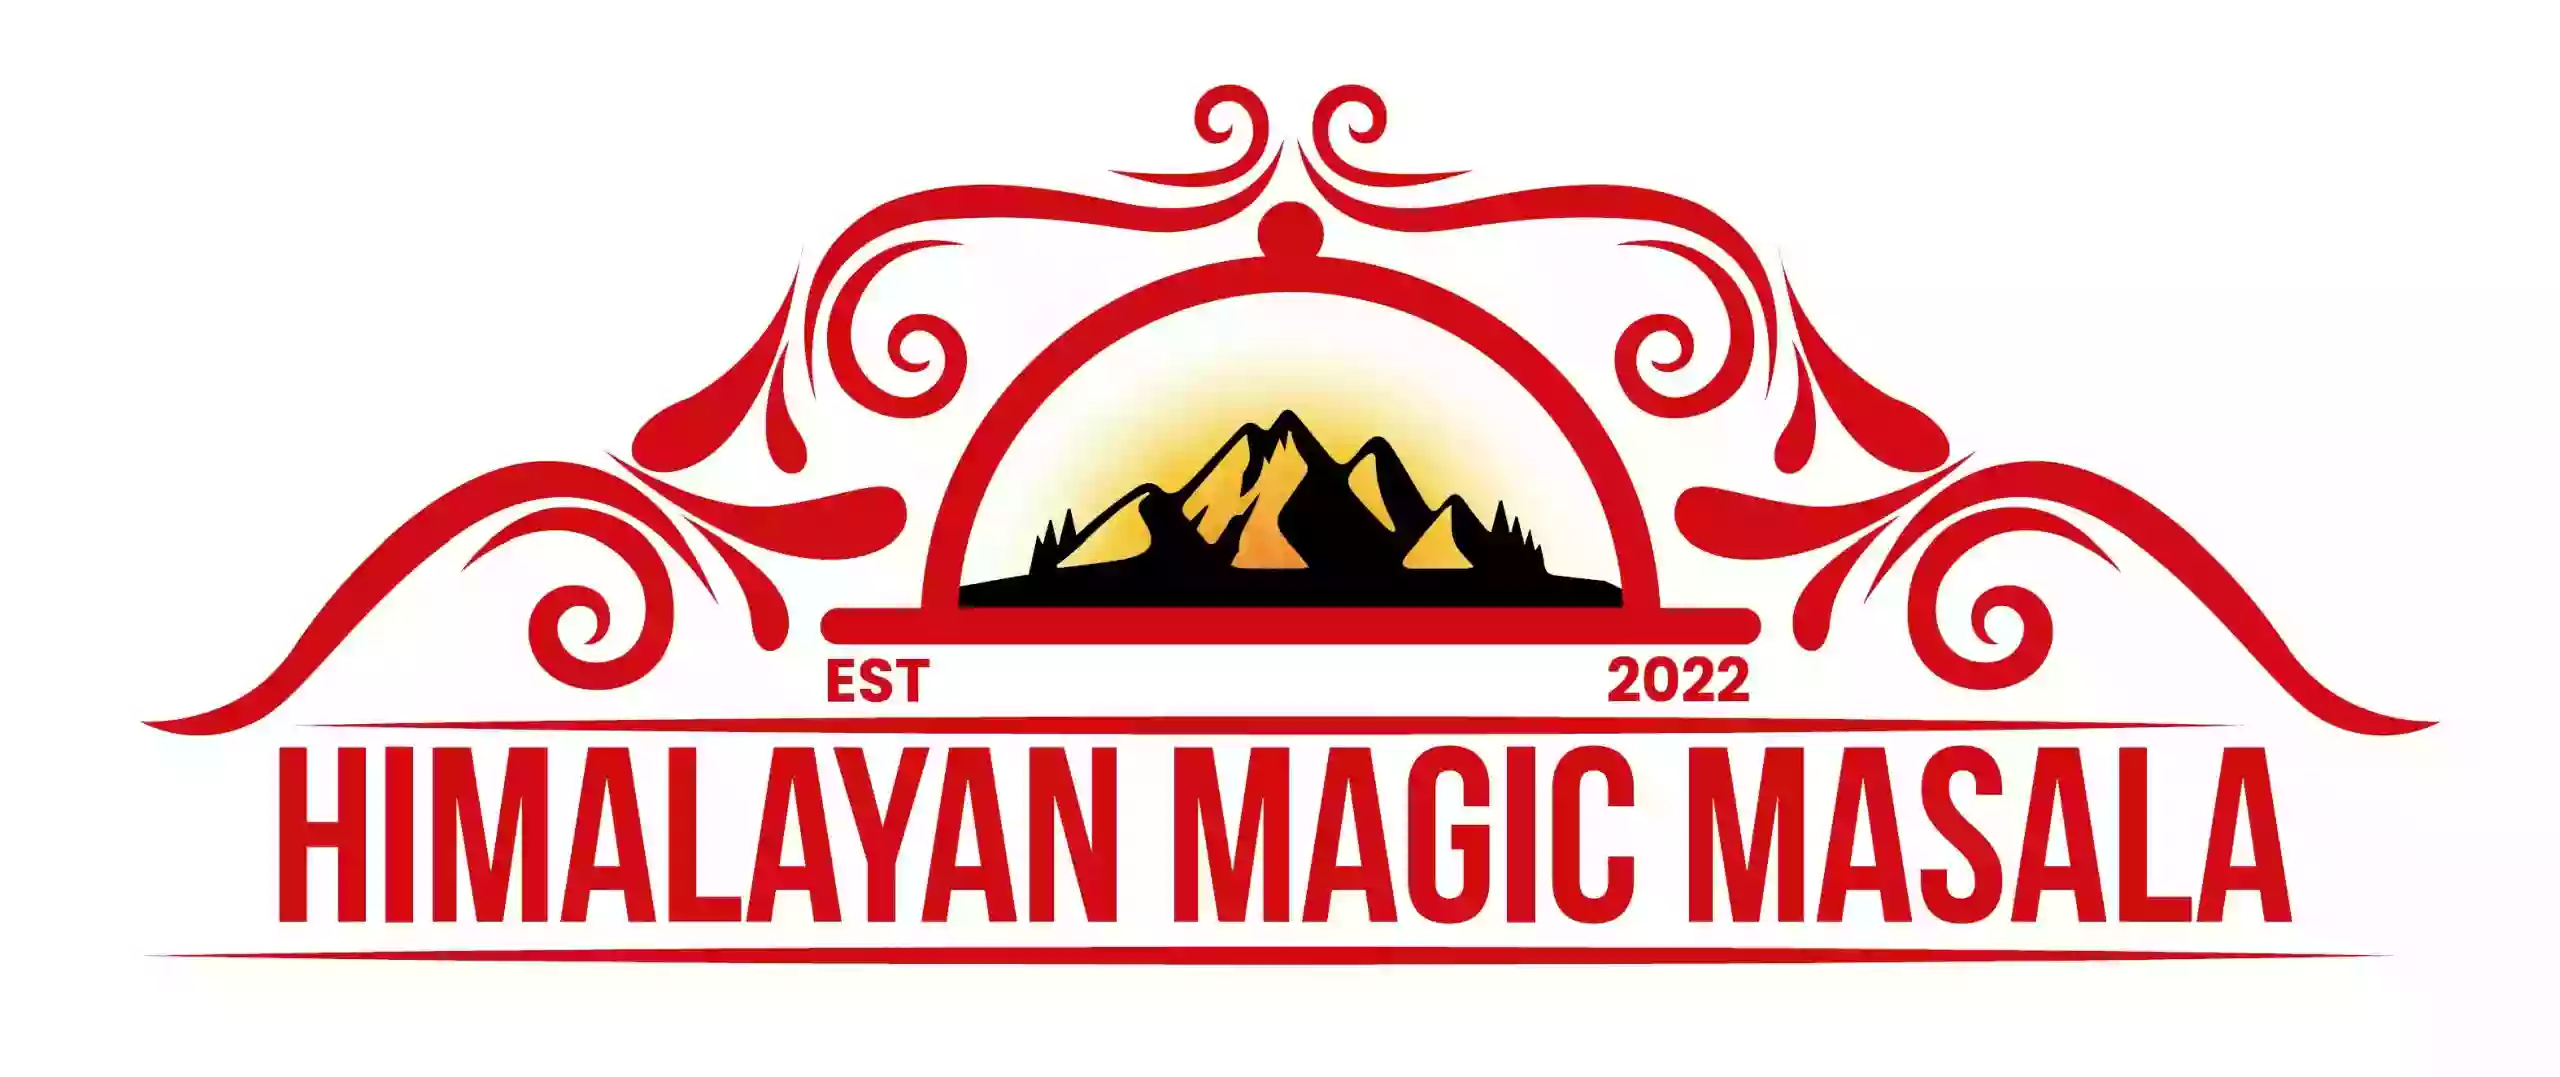 Himalayan Magic Masala